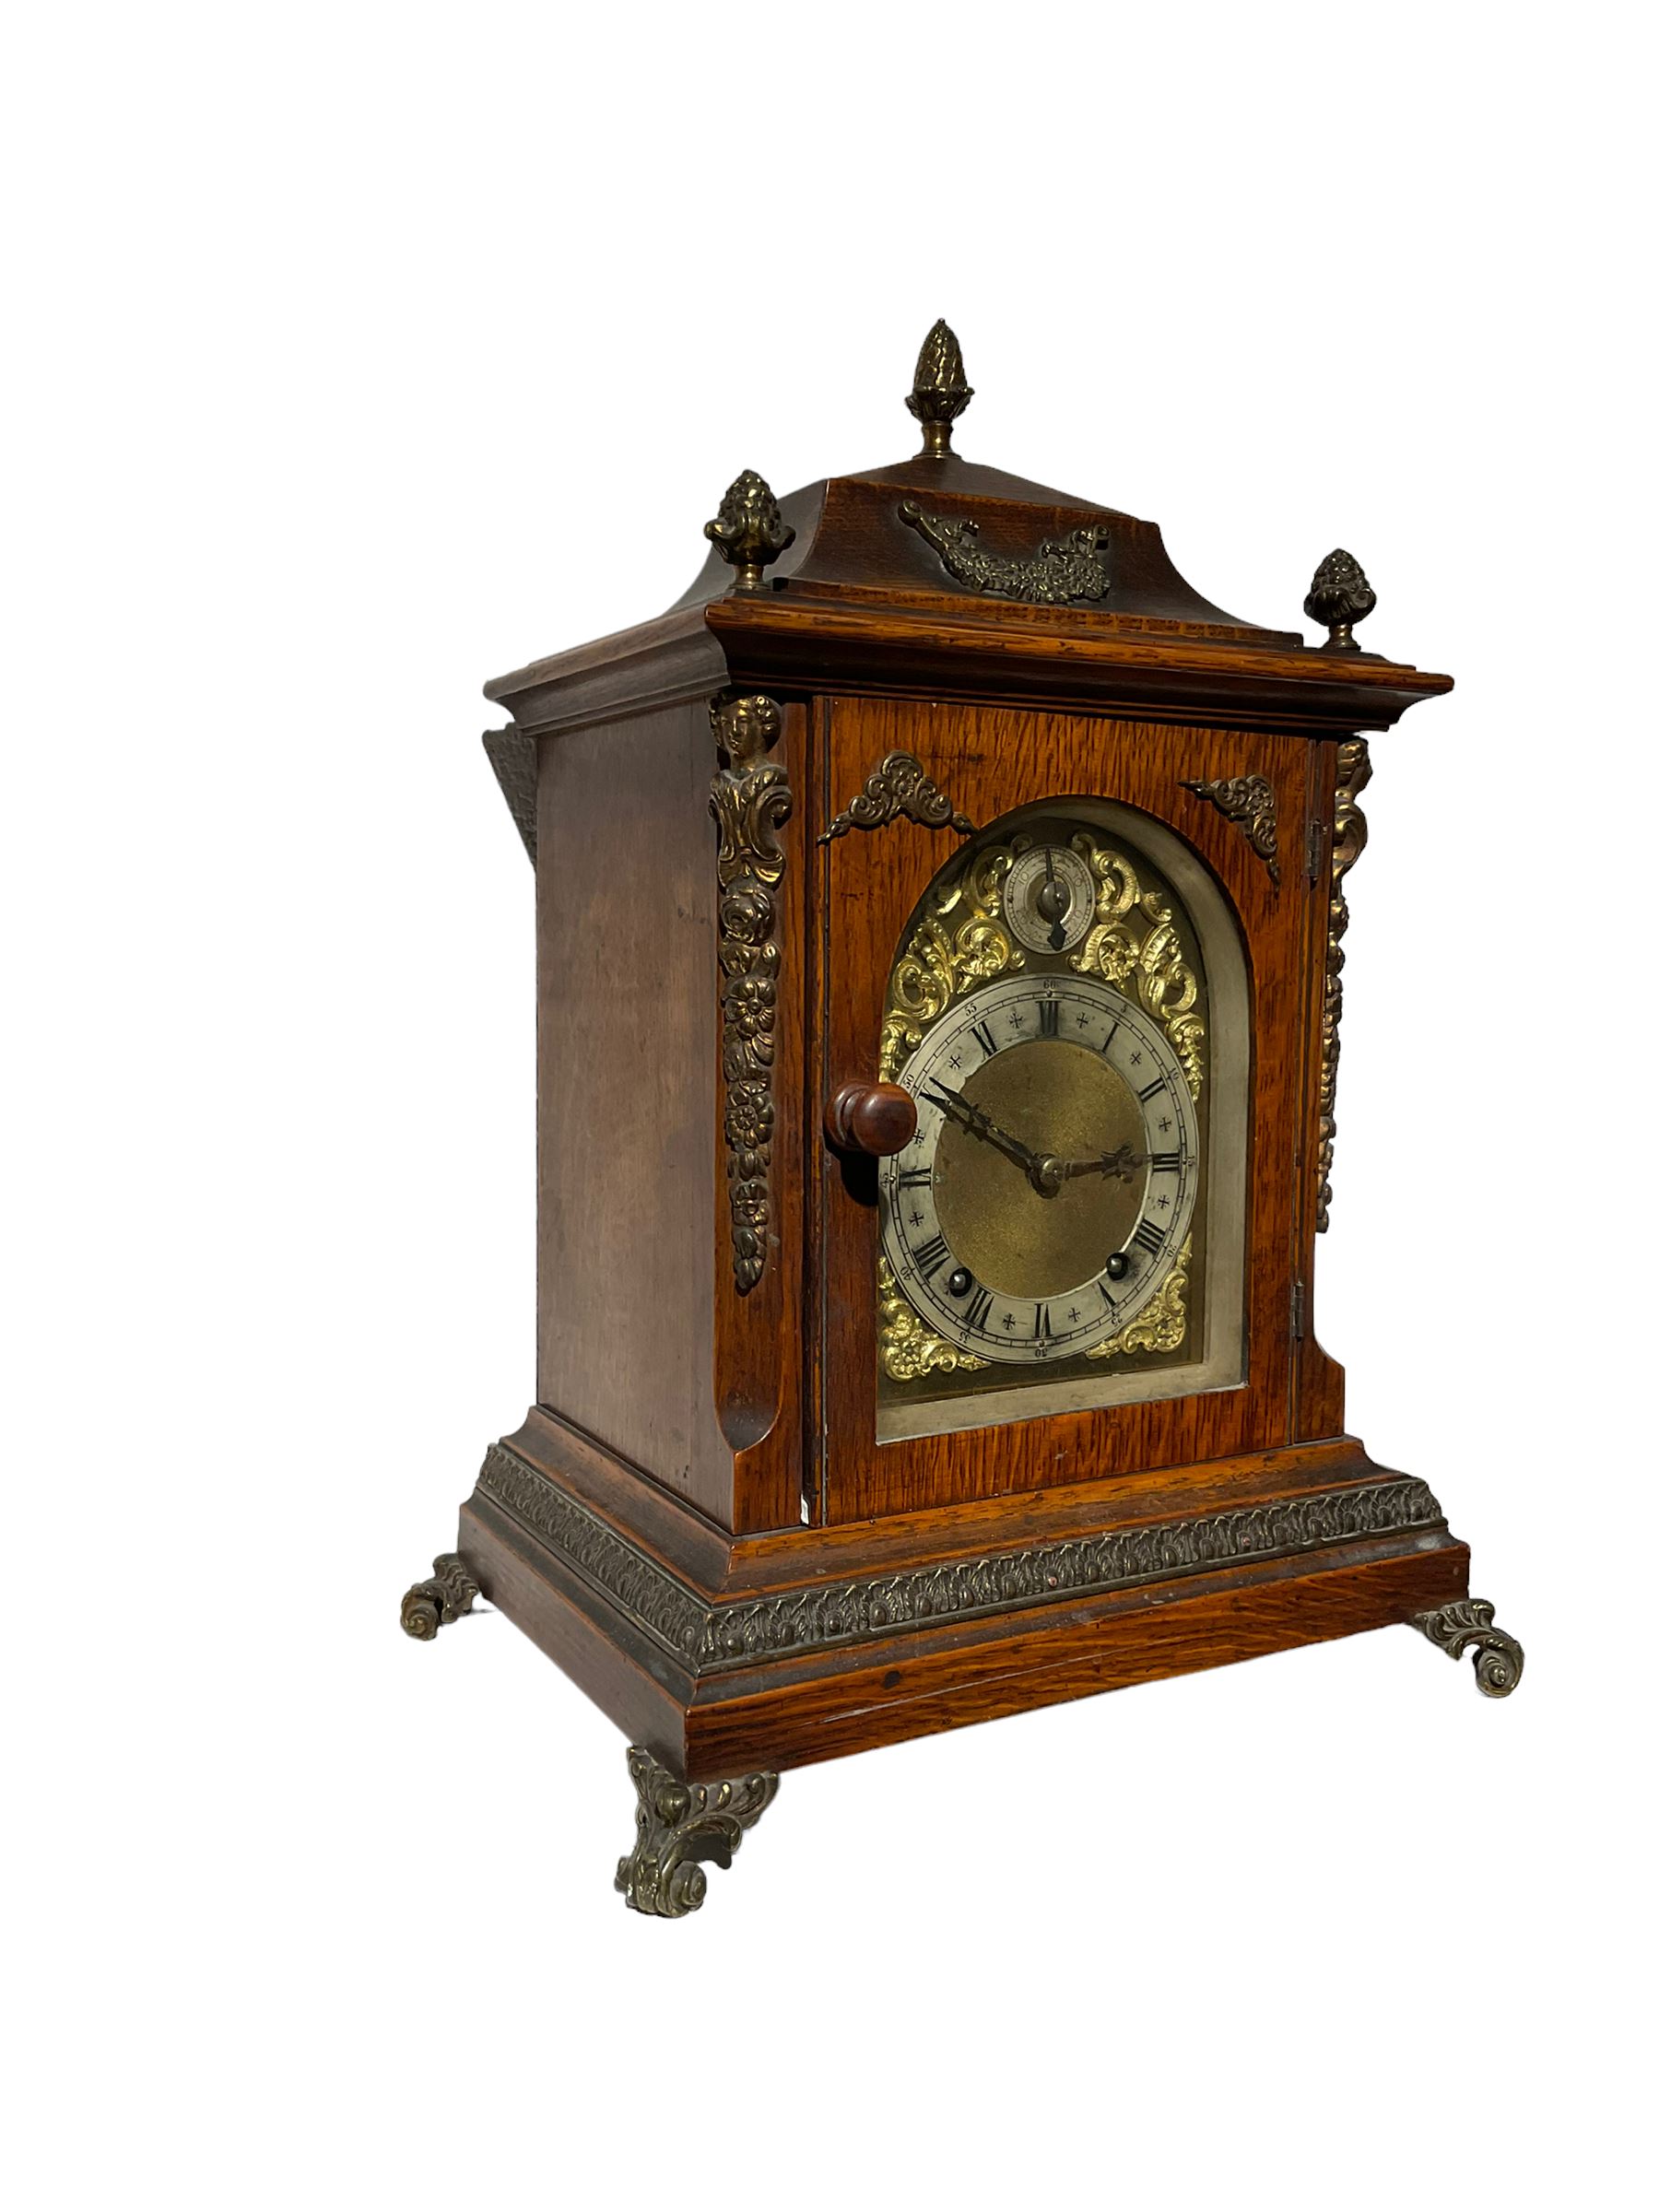 Winterhalder & Hoffmeier - 8-day quarter-striking German mantle clock in an oak case c1900 - Image 2 of 4